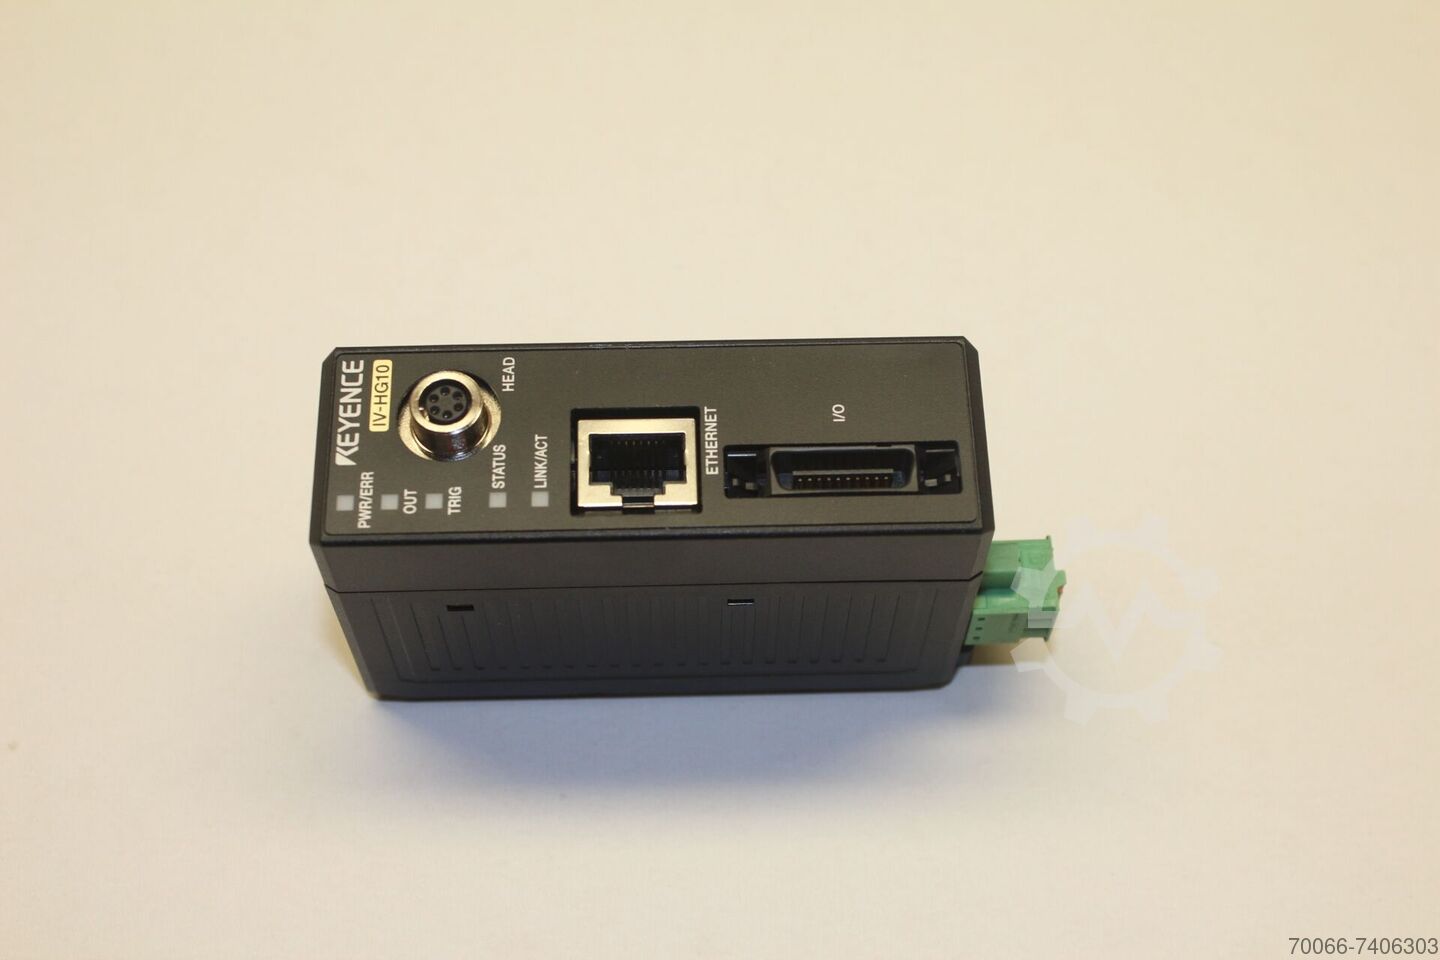 1pc NEW IV-G500MA Image recognition sensor - 3